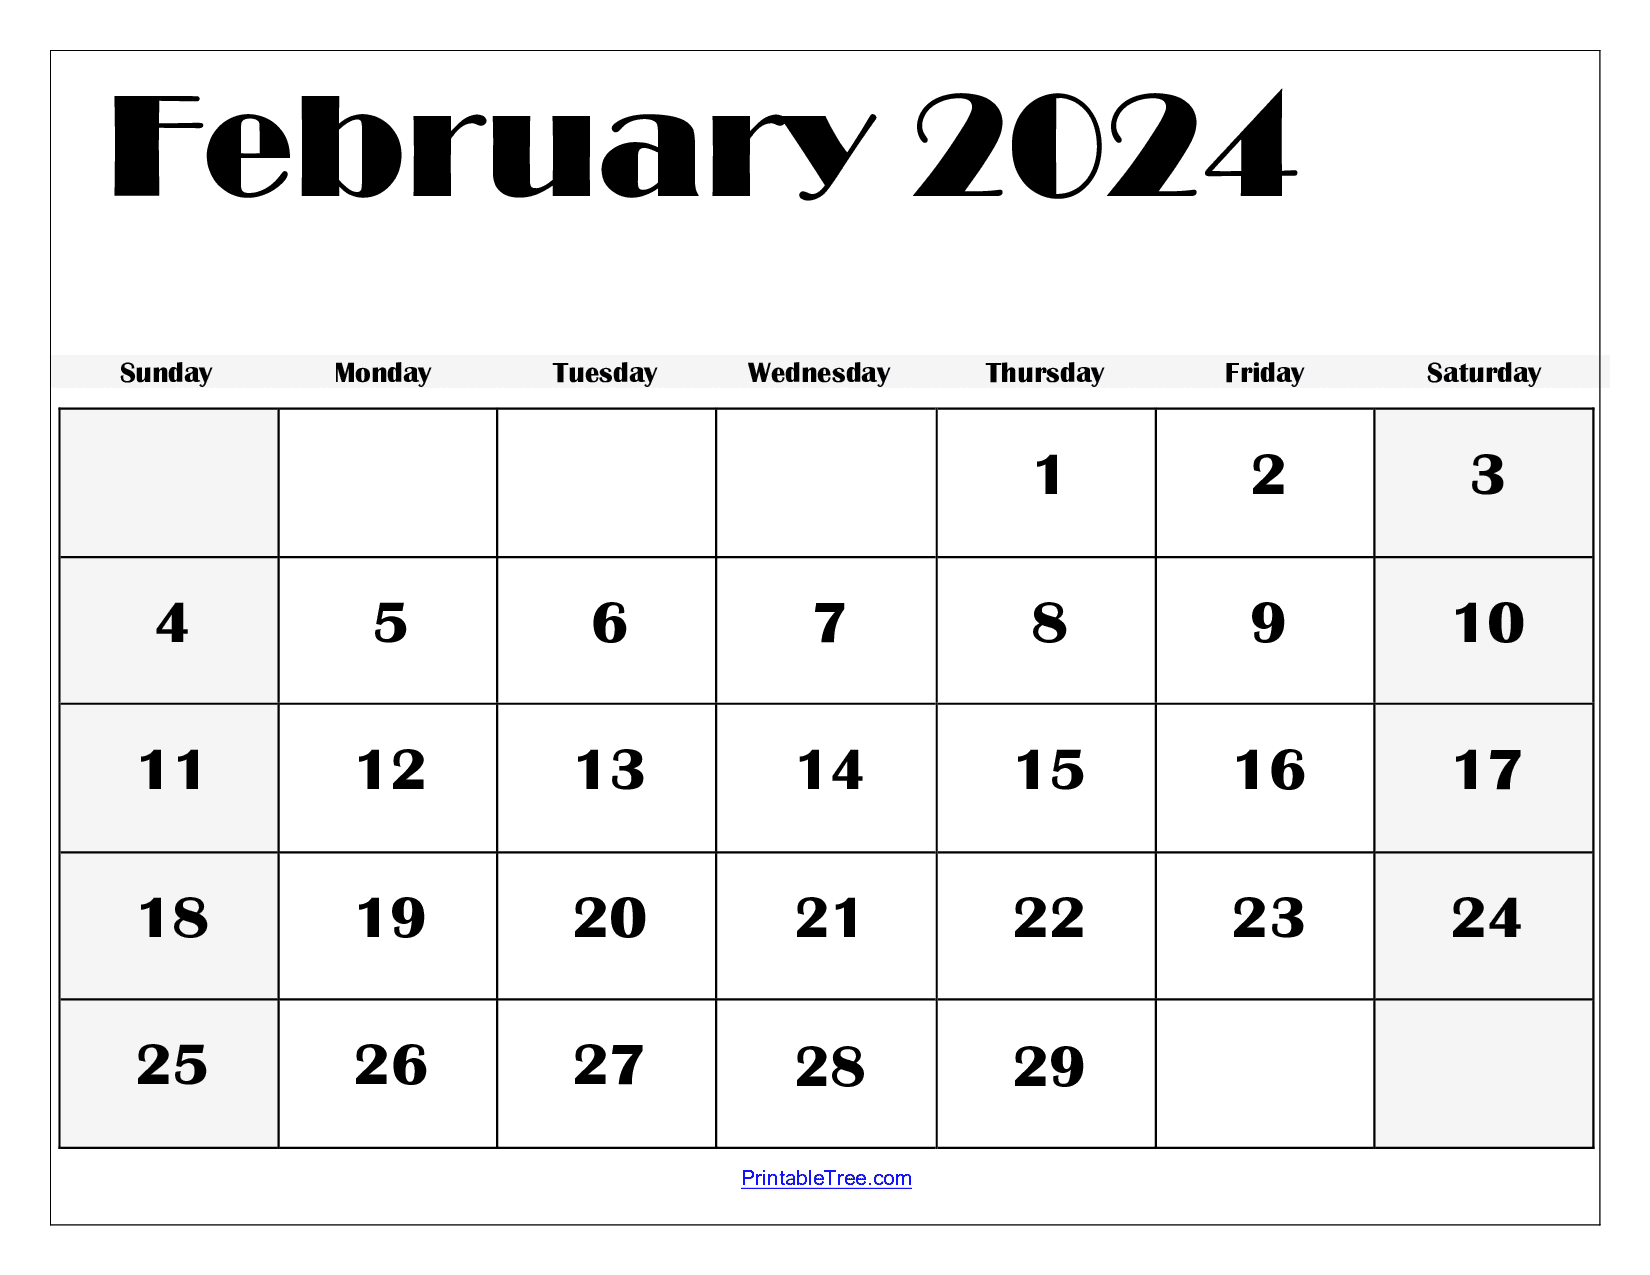 February 2024 Calendar Printable Pdf Template With Holidays for February 2024 Free Printable Calendar